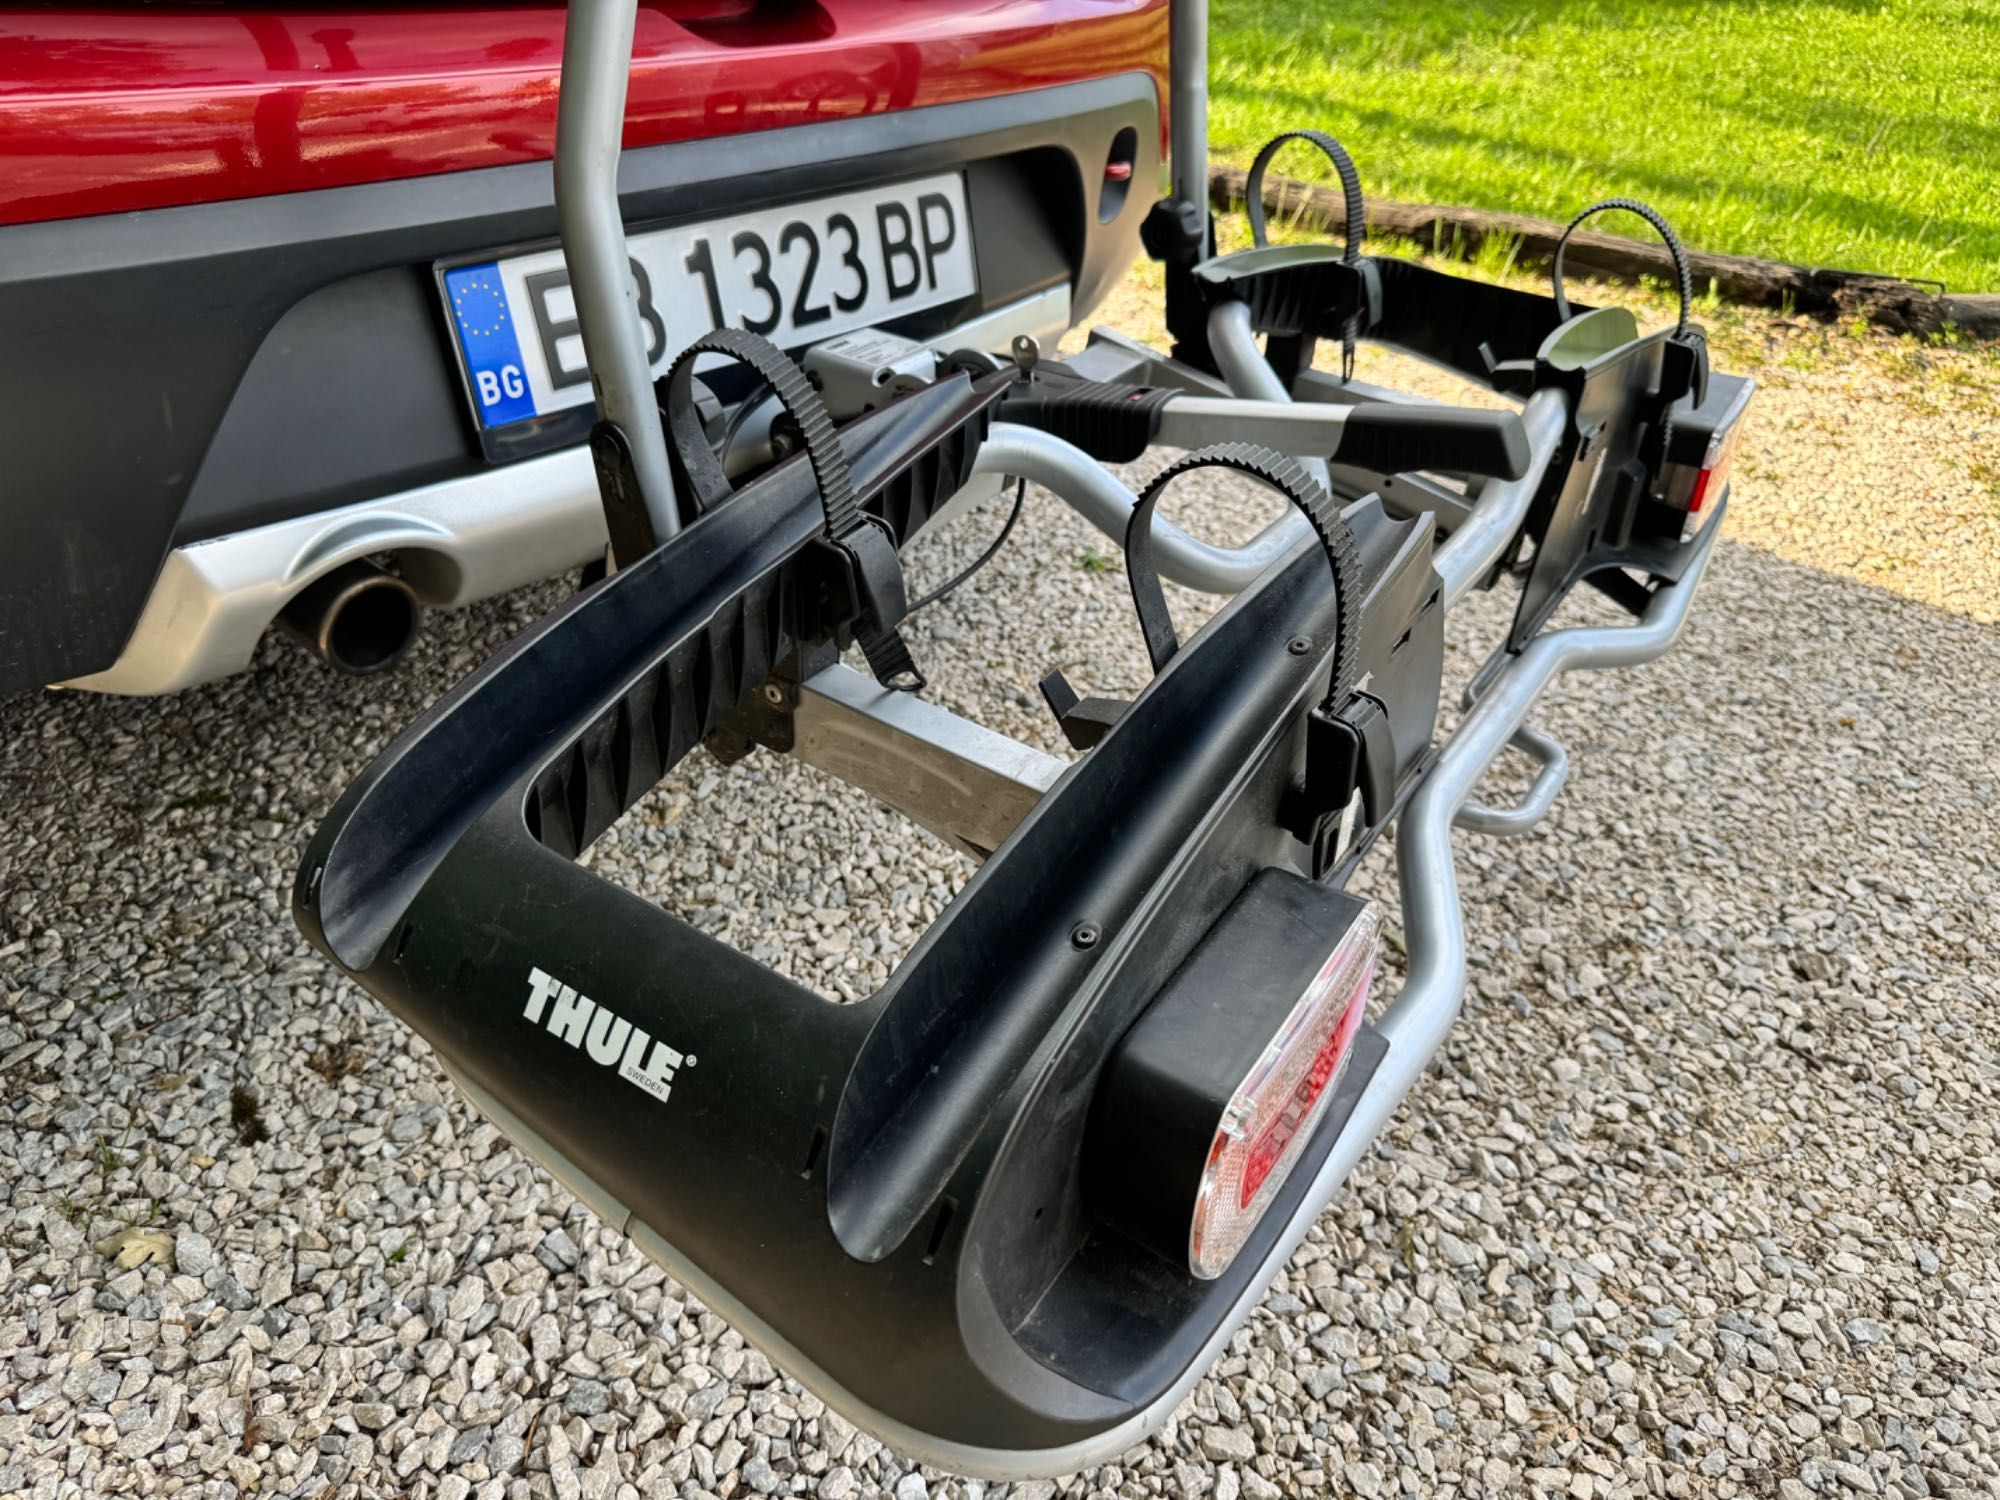 Thule Euro Power 916 bike rack, багажник за колело/ велосипед теглич